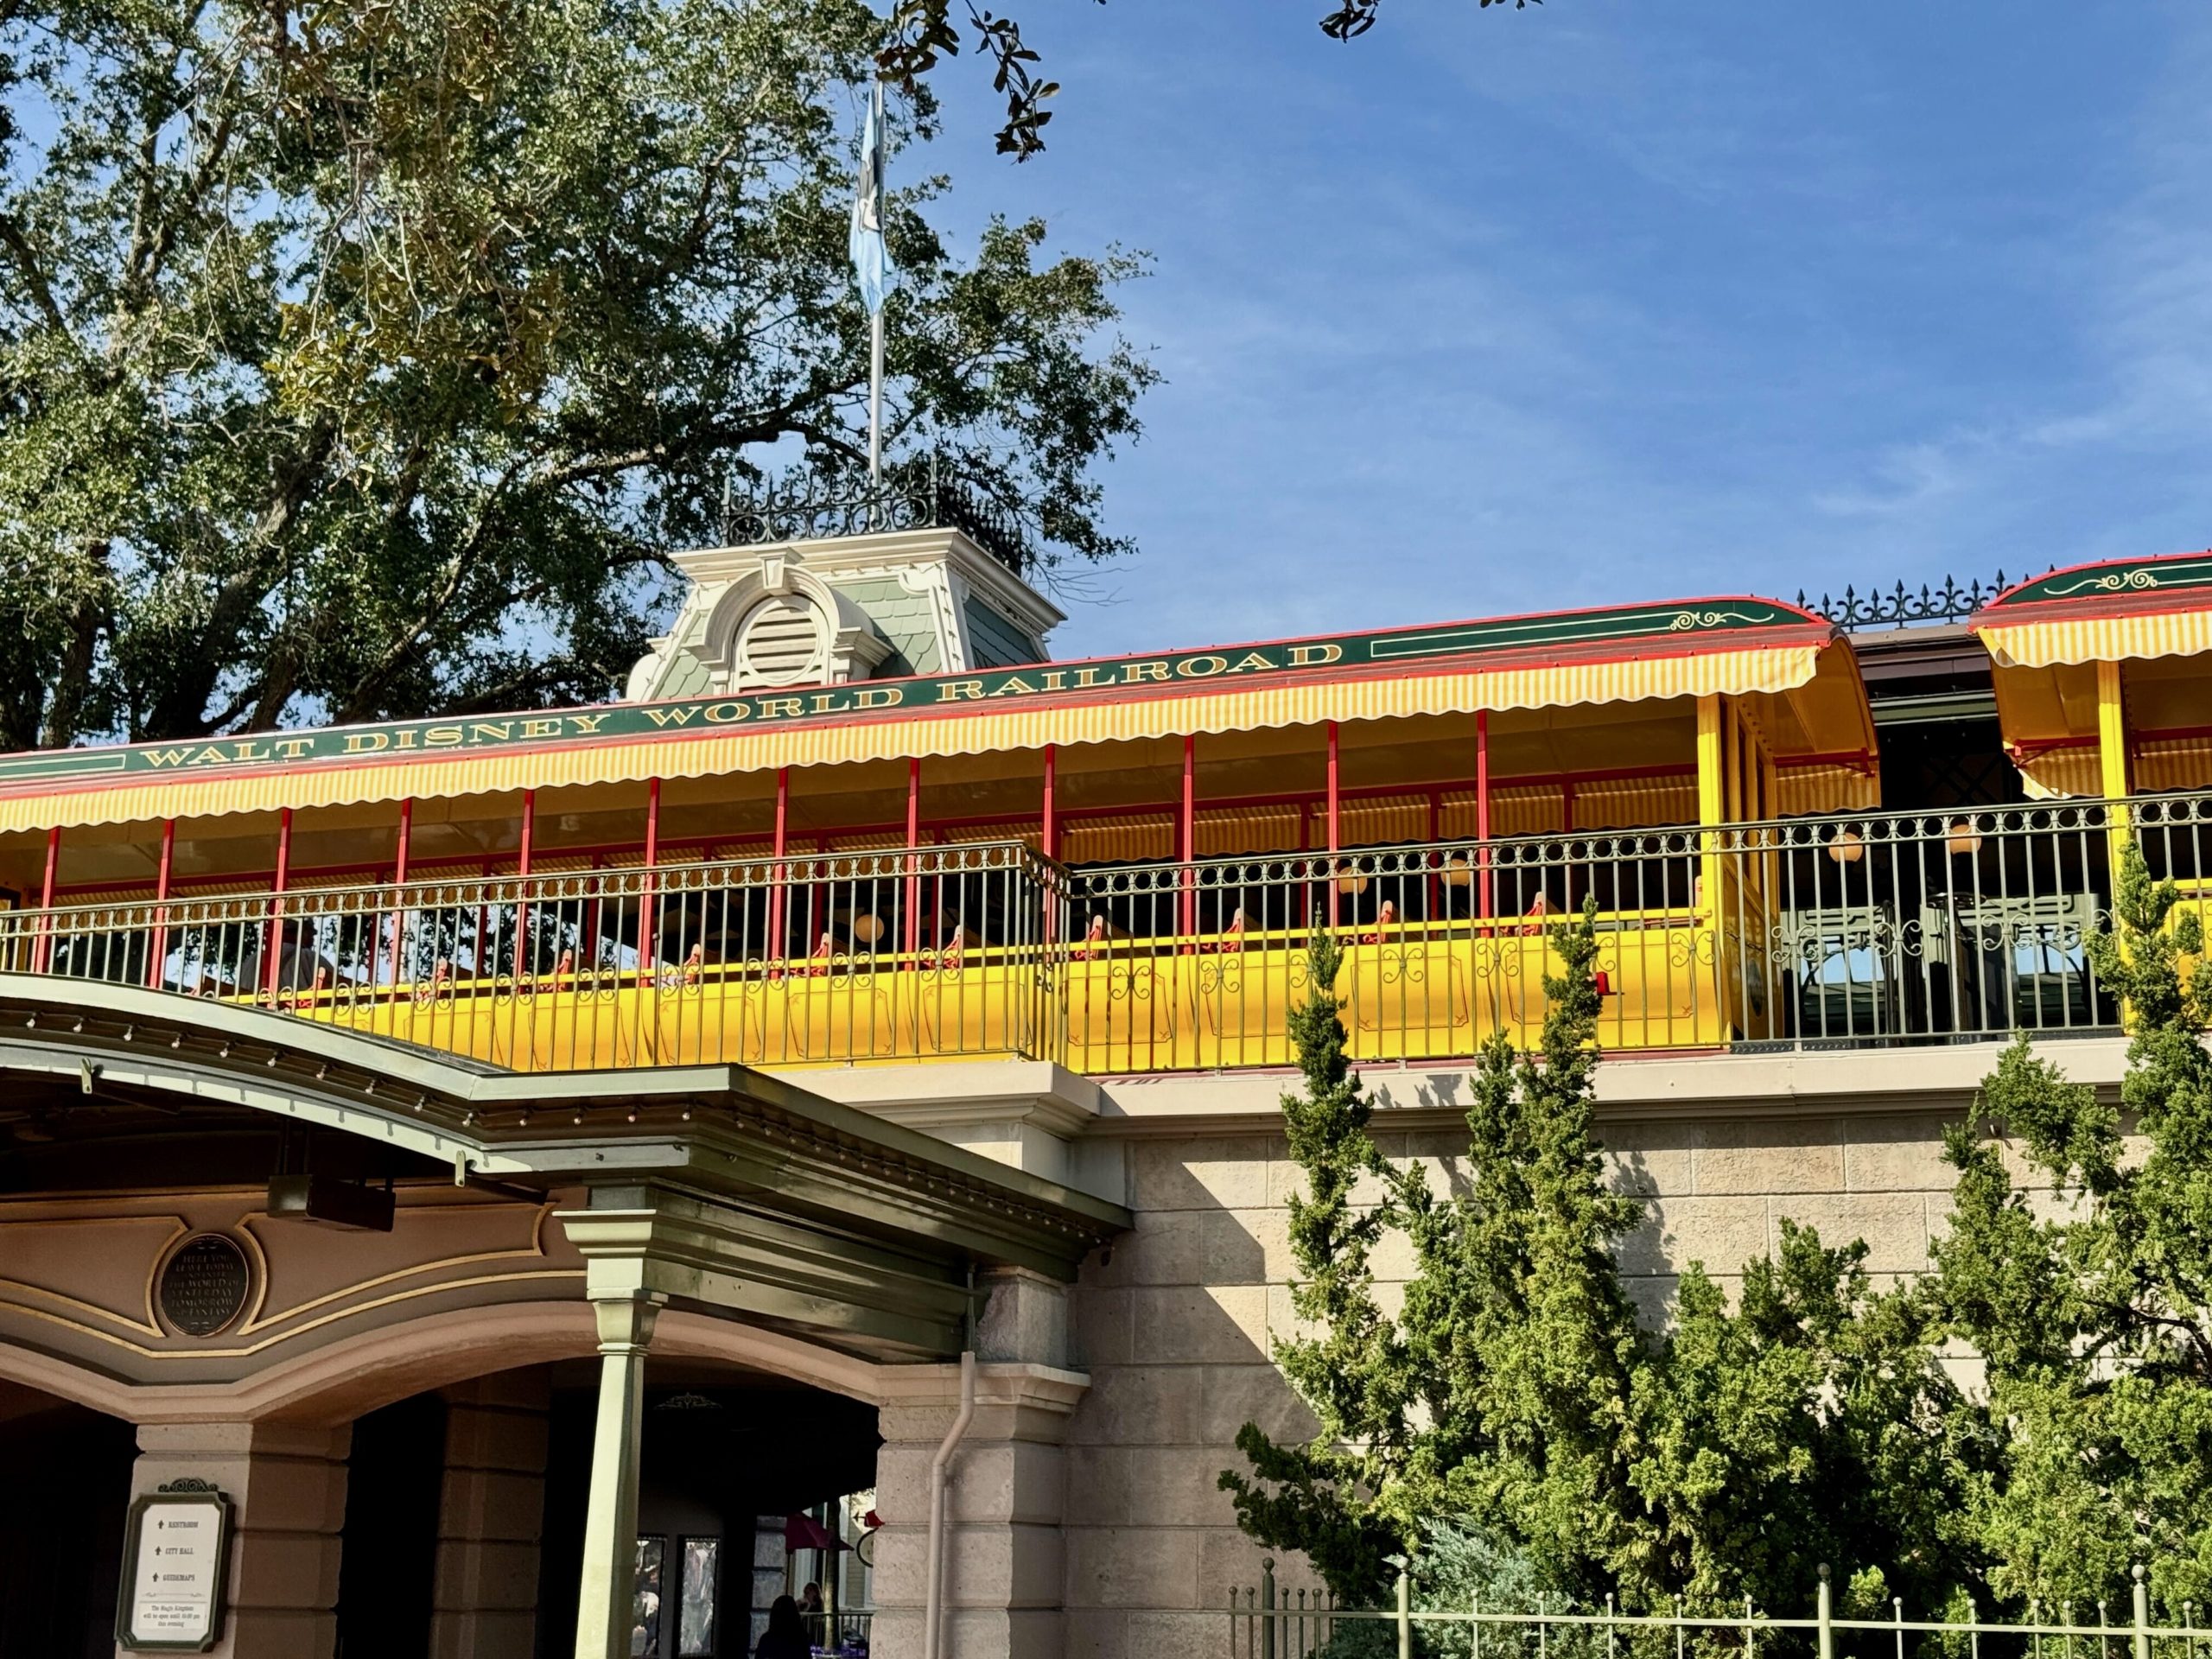 Roger E Broggie Train Walt Disney World Railroad Magic Kingdom